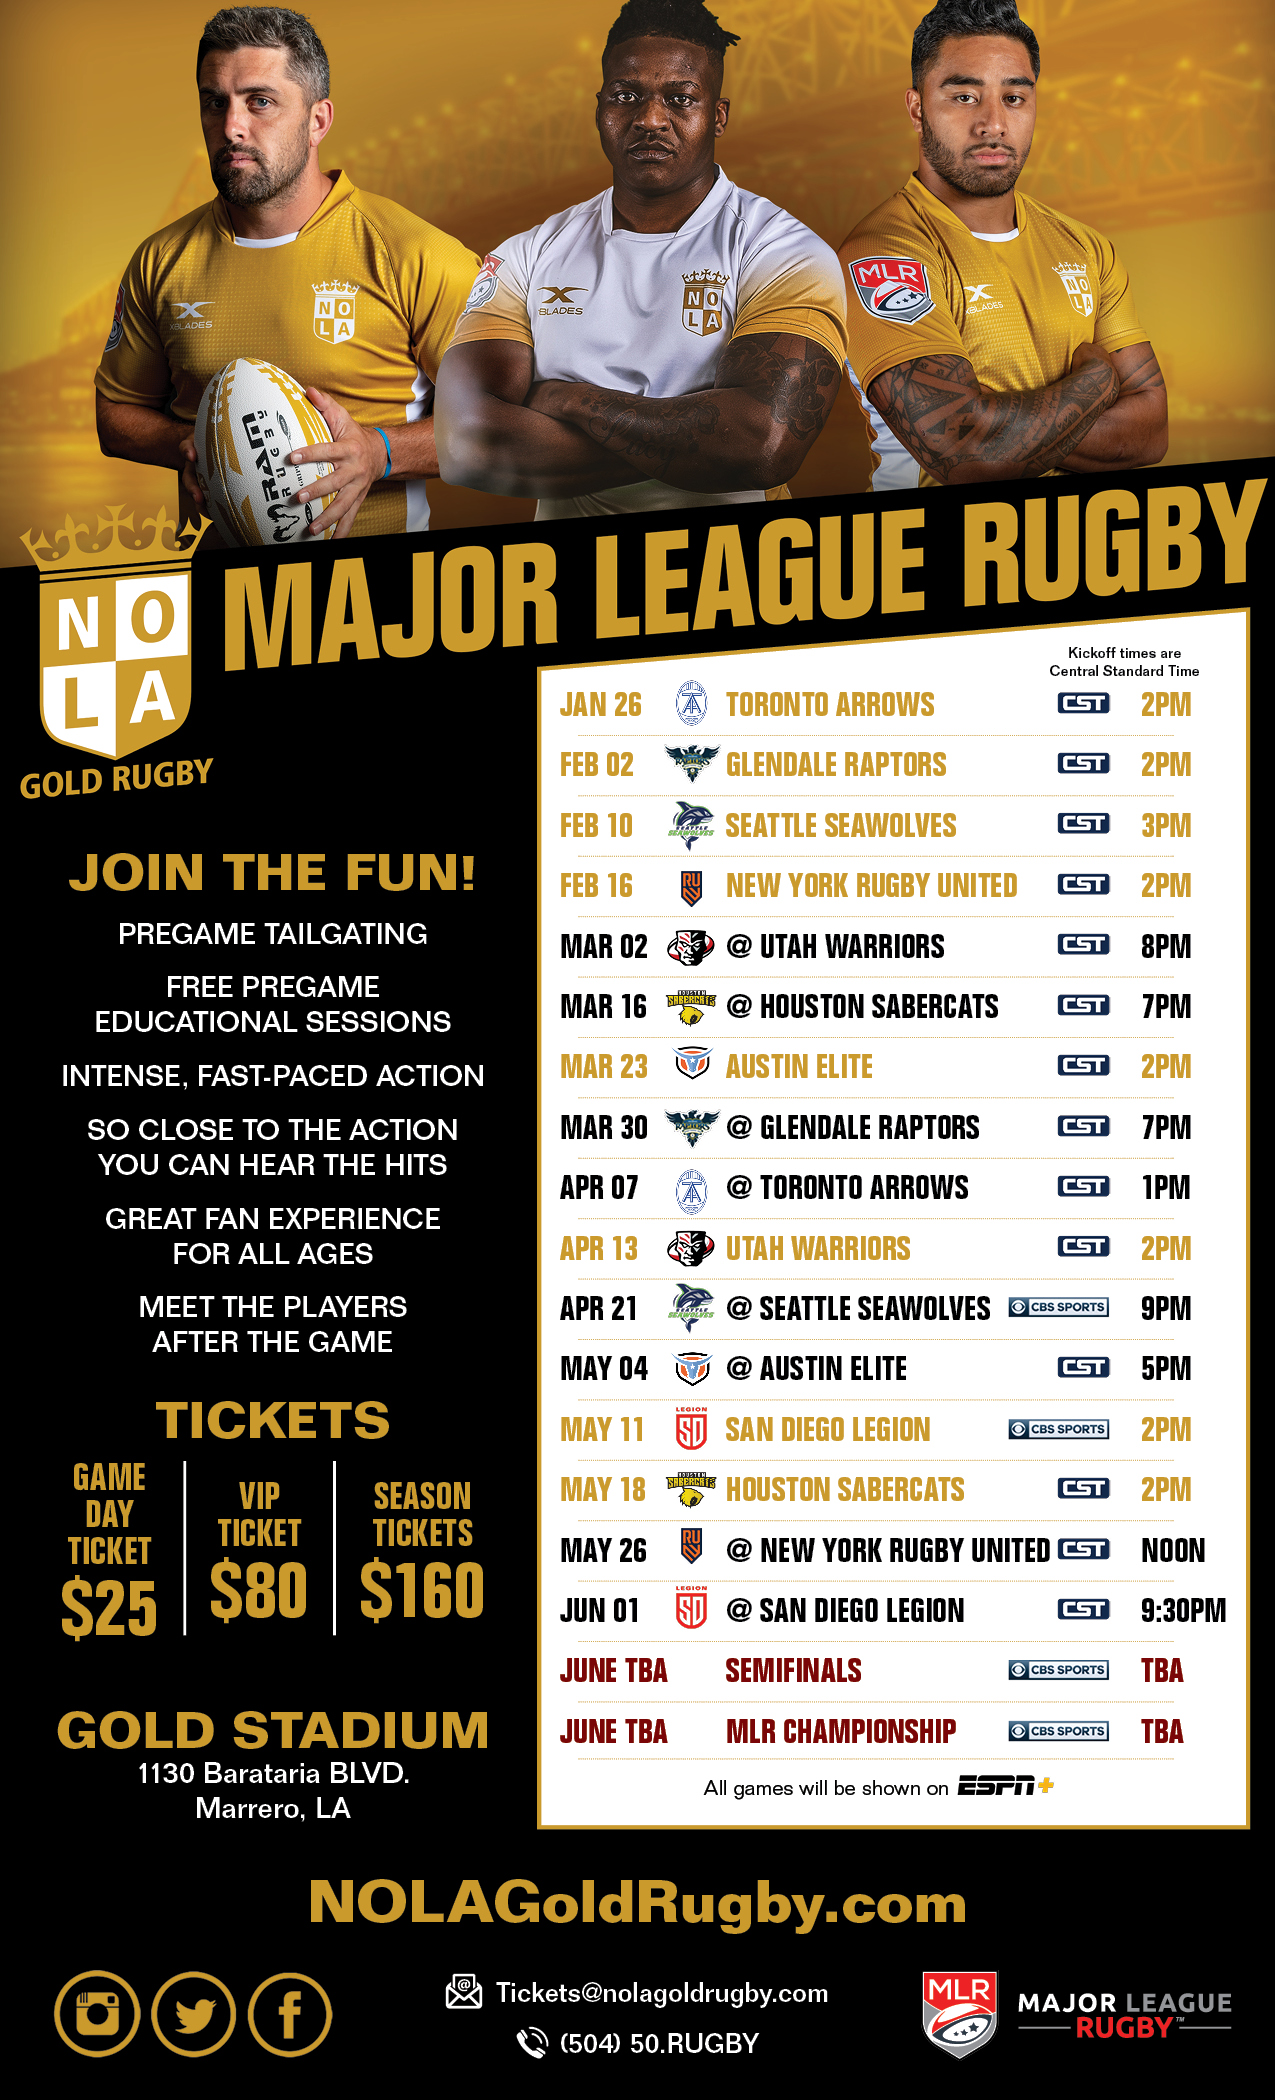 NOLA 2019 Schedule Announced - NOLA Gold Rugby